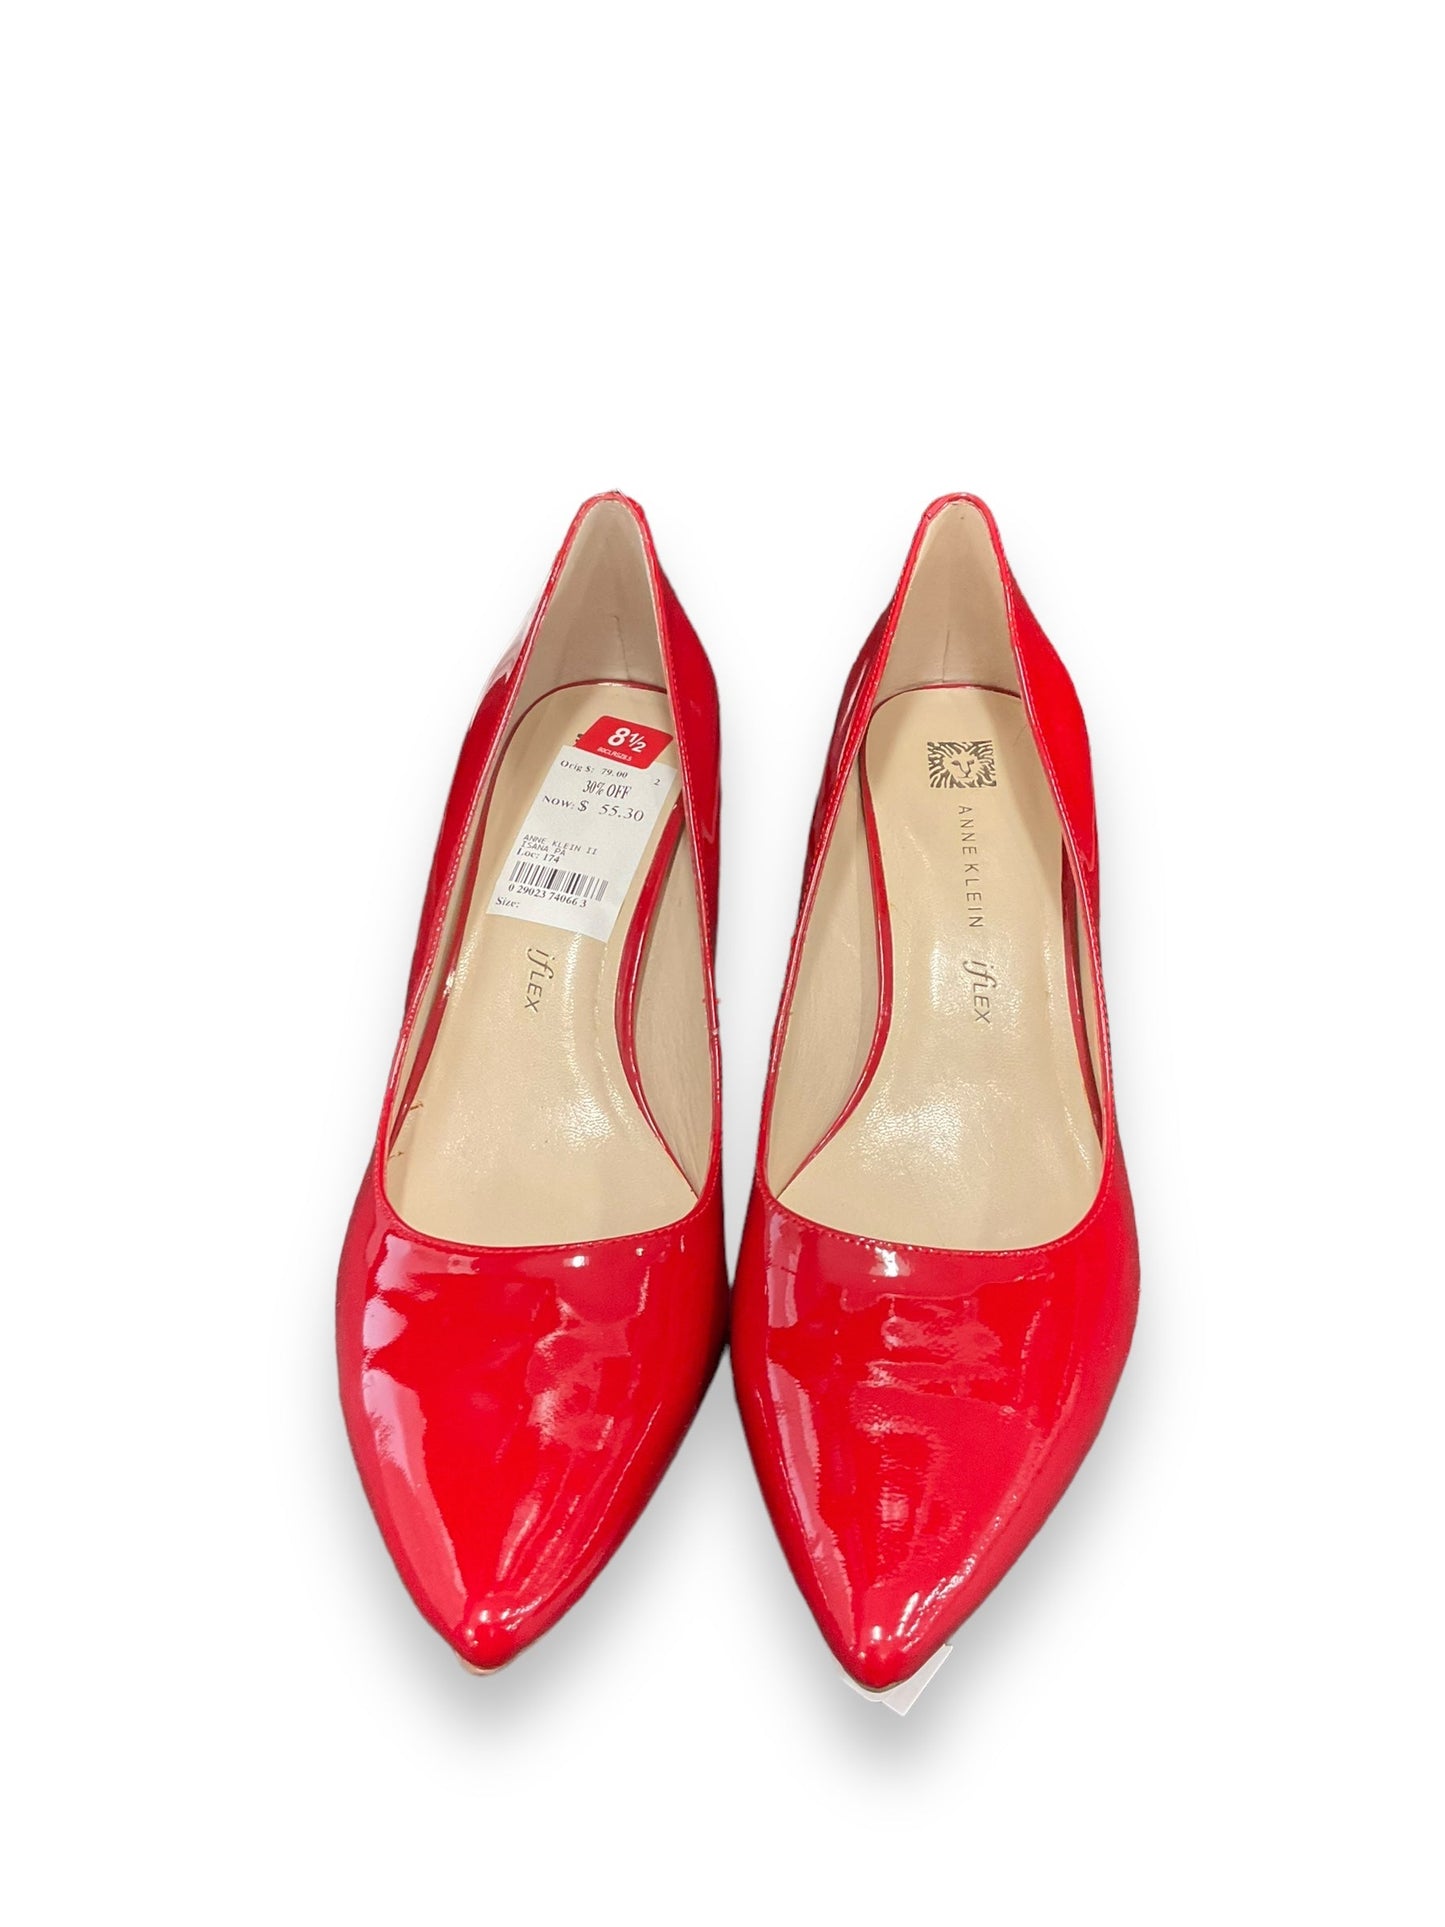 Red Shoes Heels Kitten Anne Klein, Size 8.5